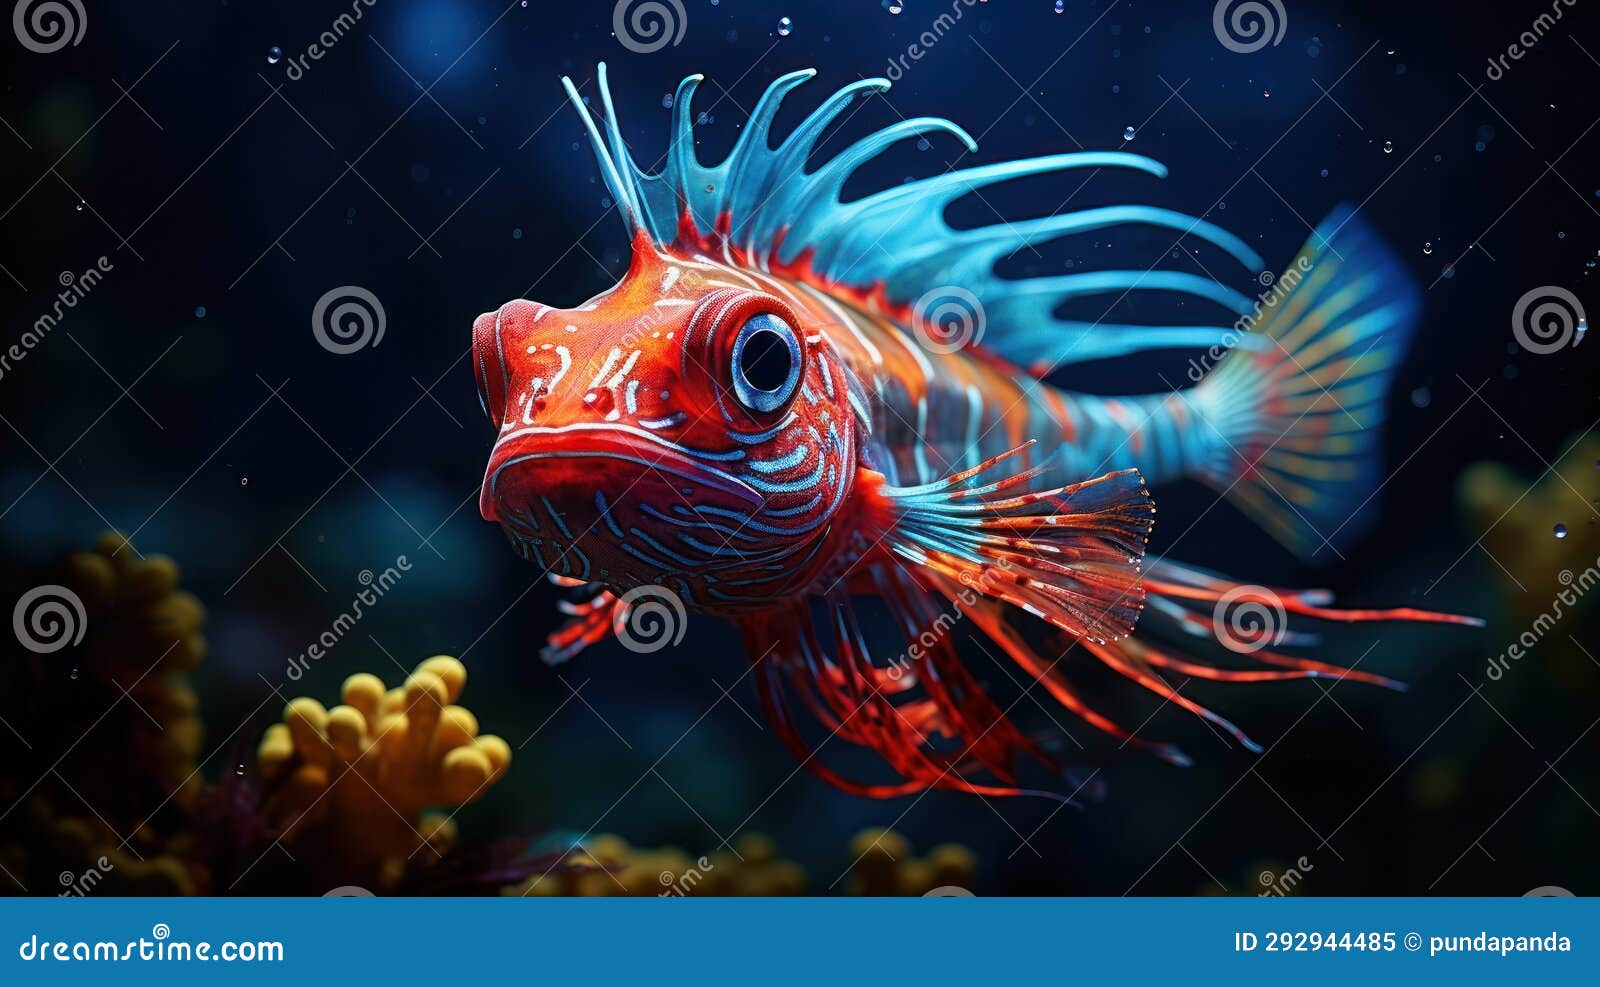 A magical underwater world stock illustration. Illustration of